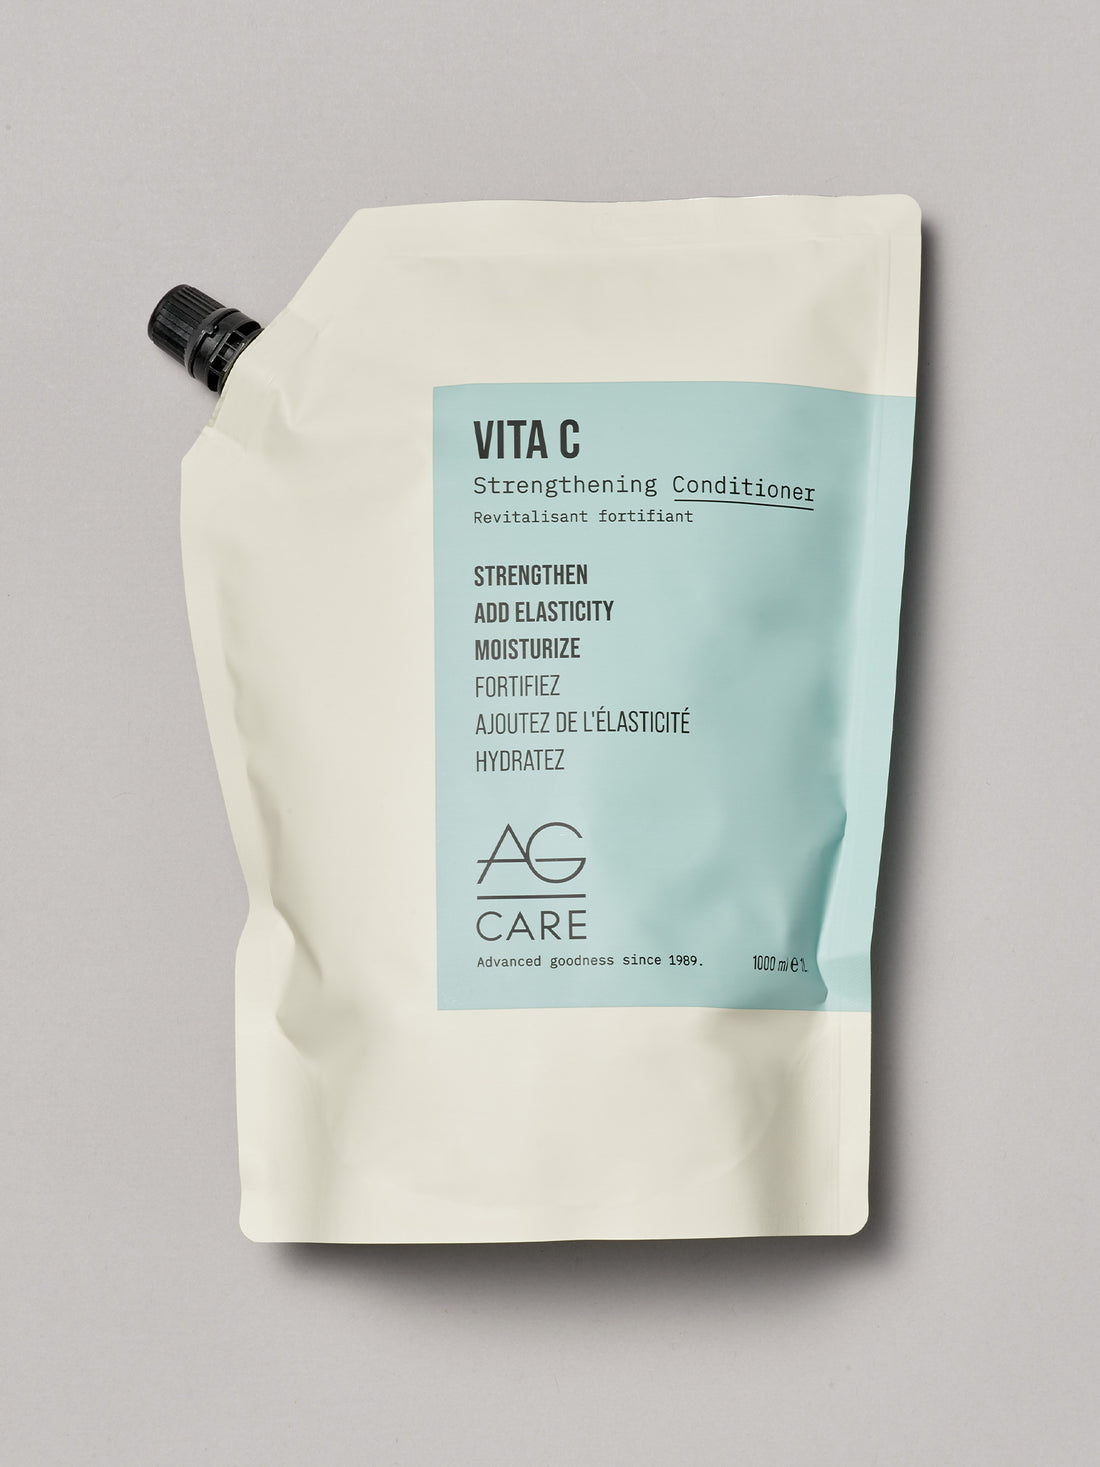 VITA C Strengthening Conditioner